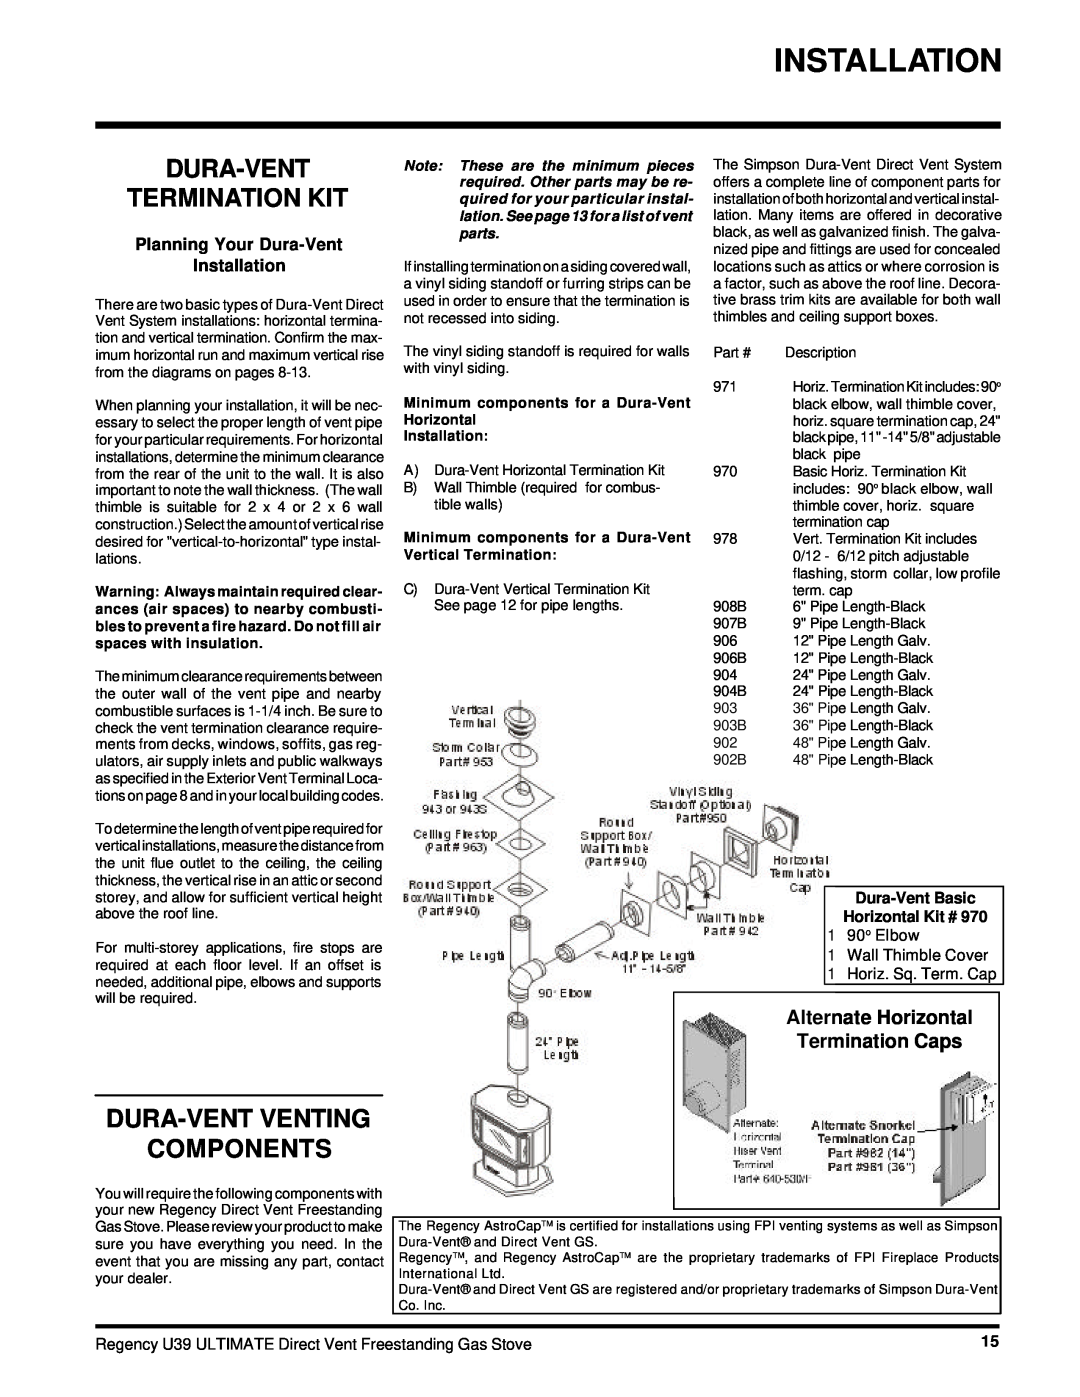 Regency U39-NG Dura-Vent Termination Kit, Dura-Ventventing Components, Alternate Horizontal Termination Caps, Installation 